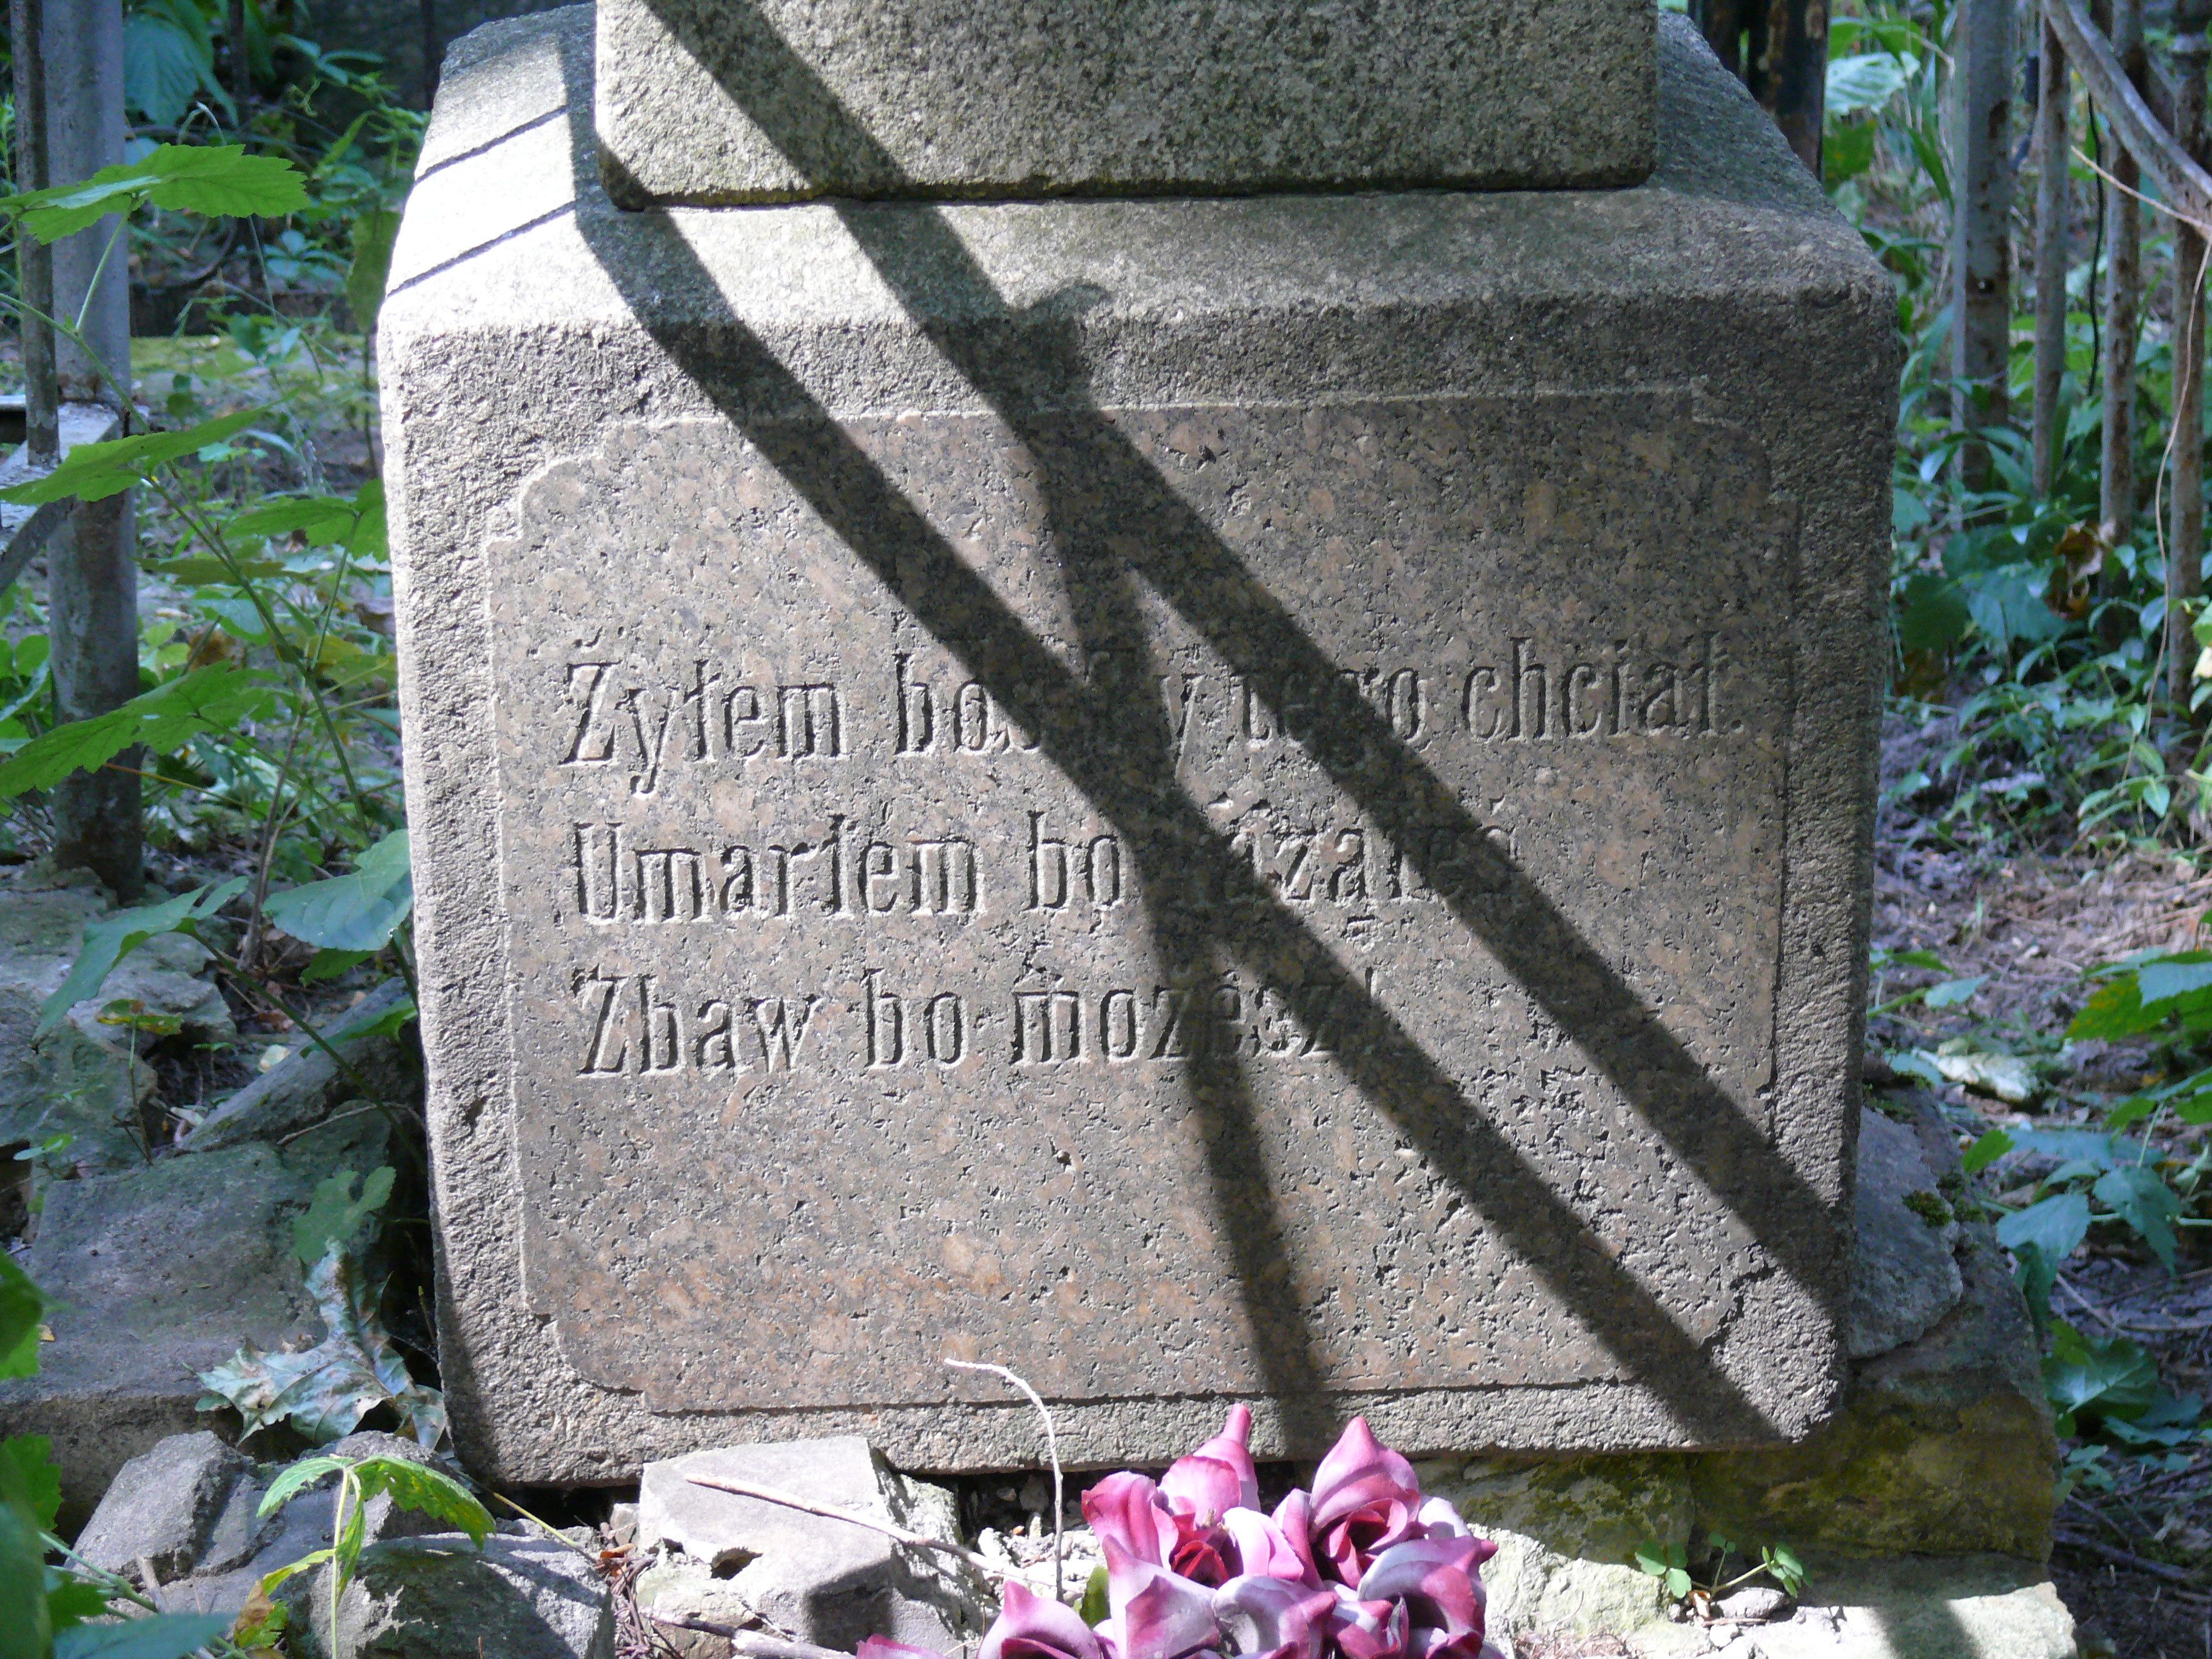 Inscription from the gravestone of Józef Terpiłowski